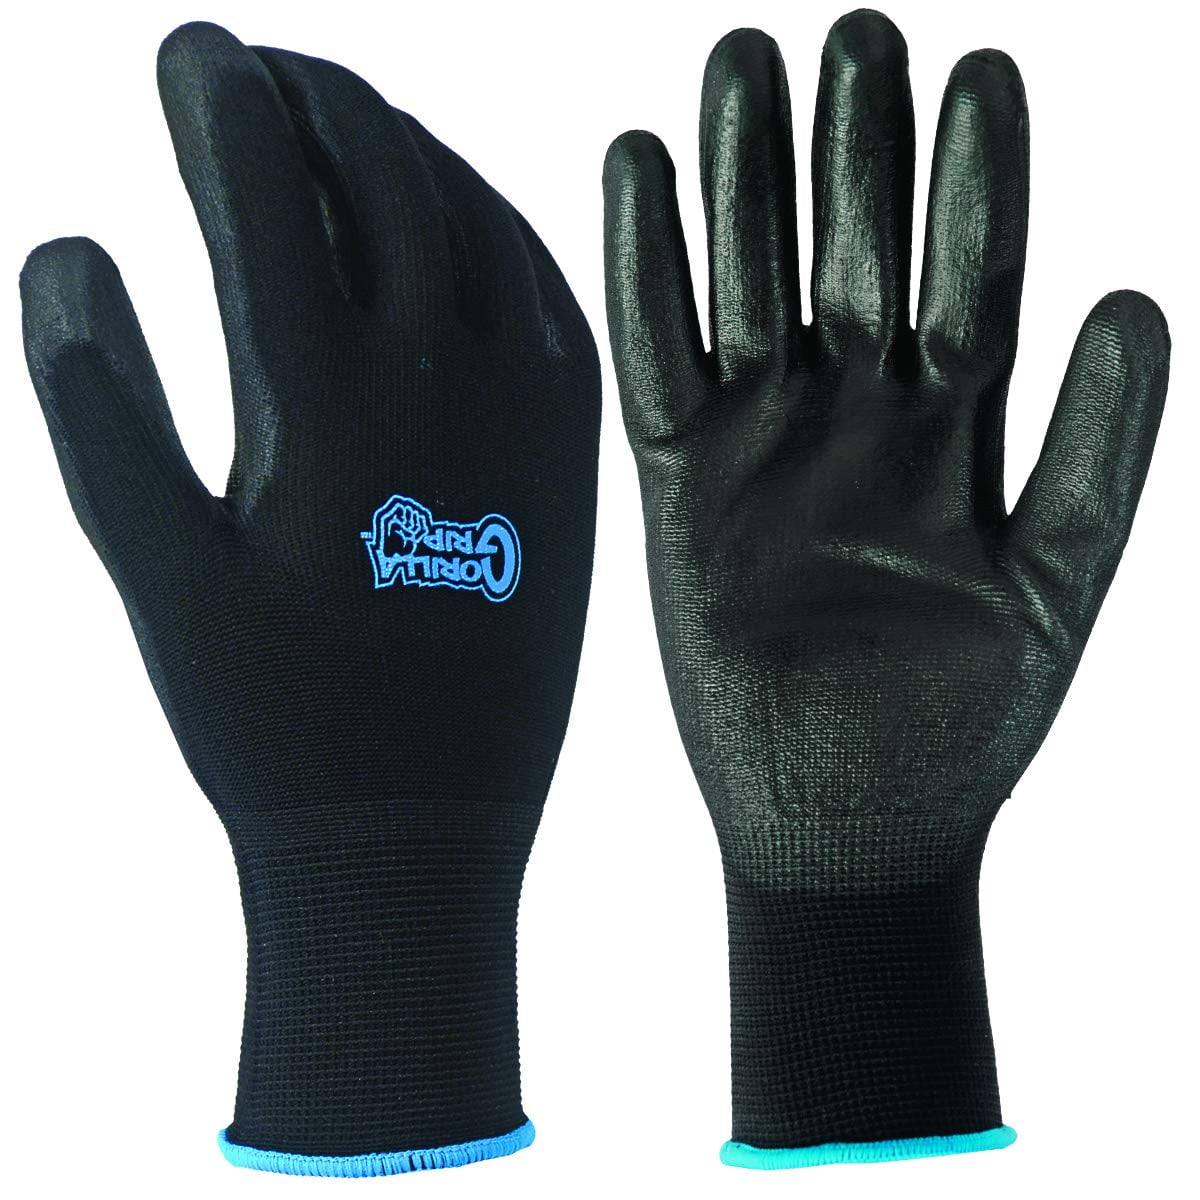 Gorilla Grip Slip Resistant All Purpose Work Gloves 5 Pack